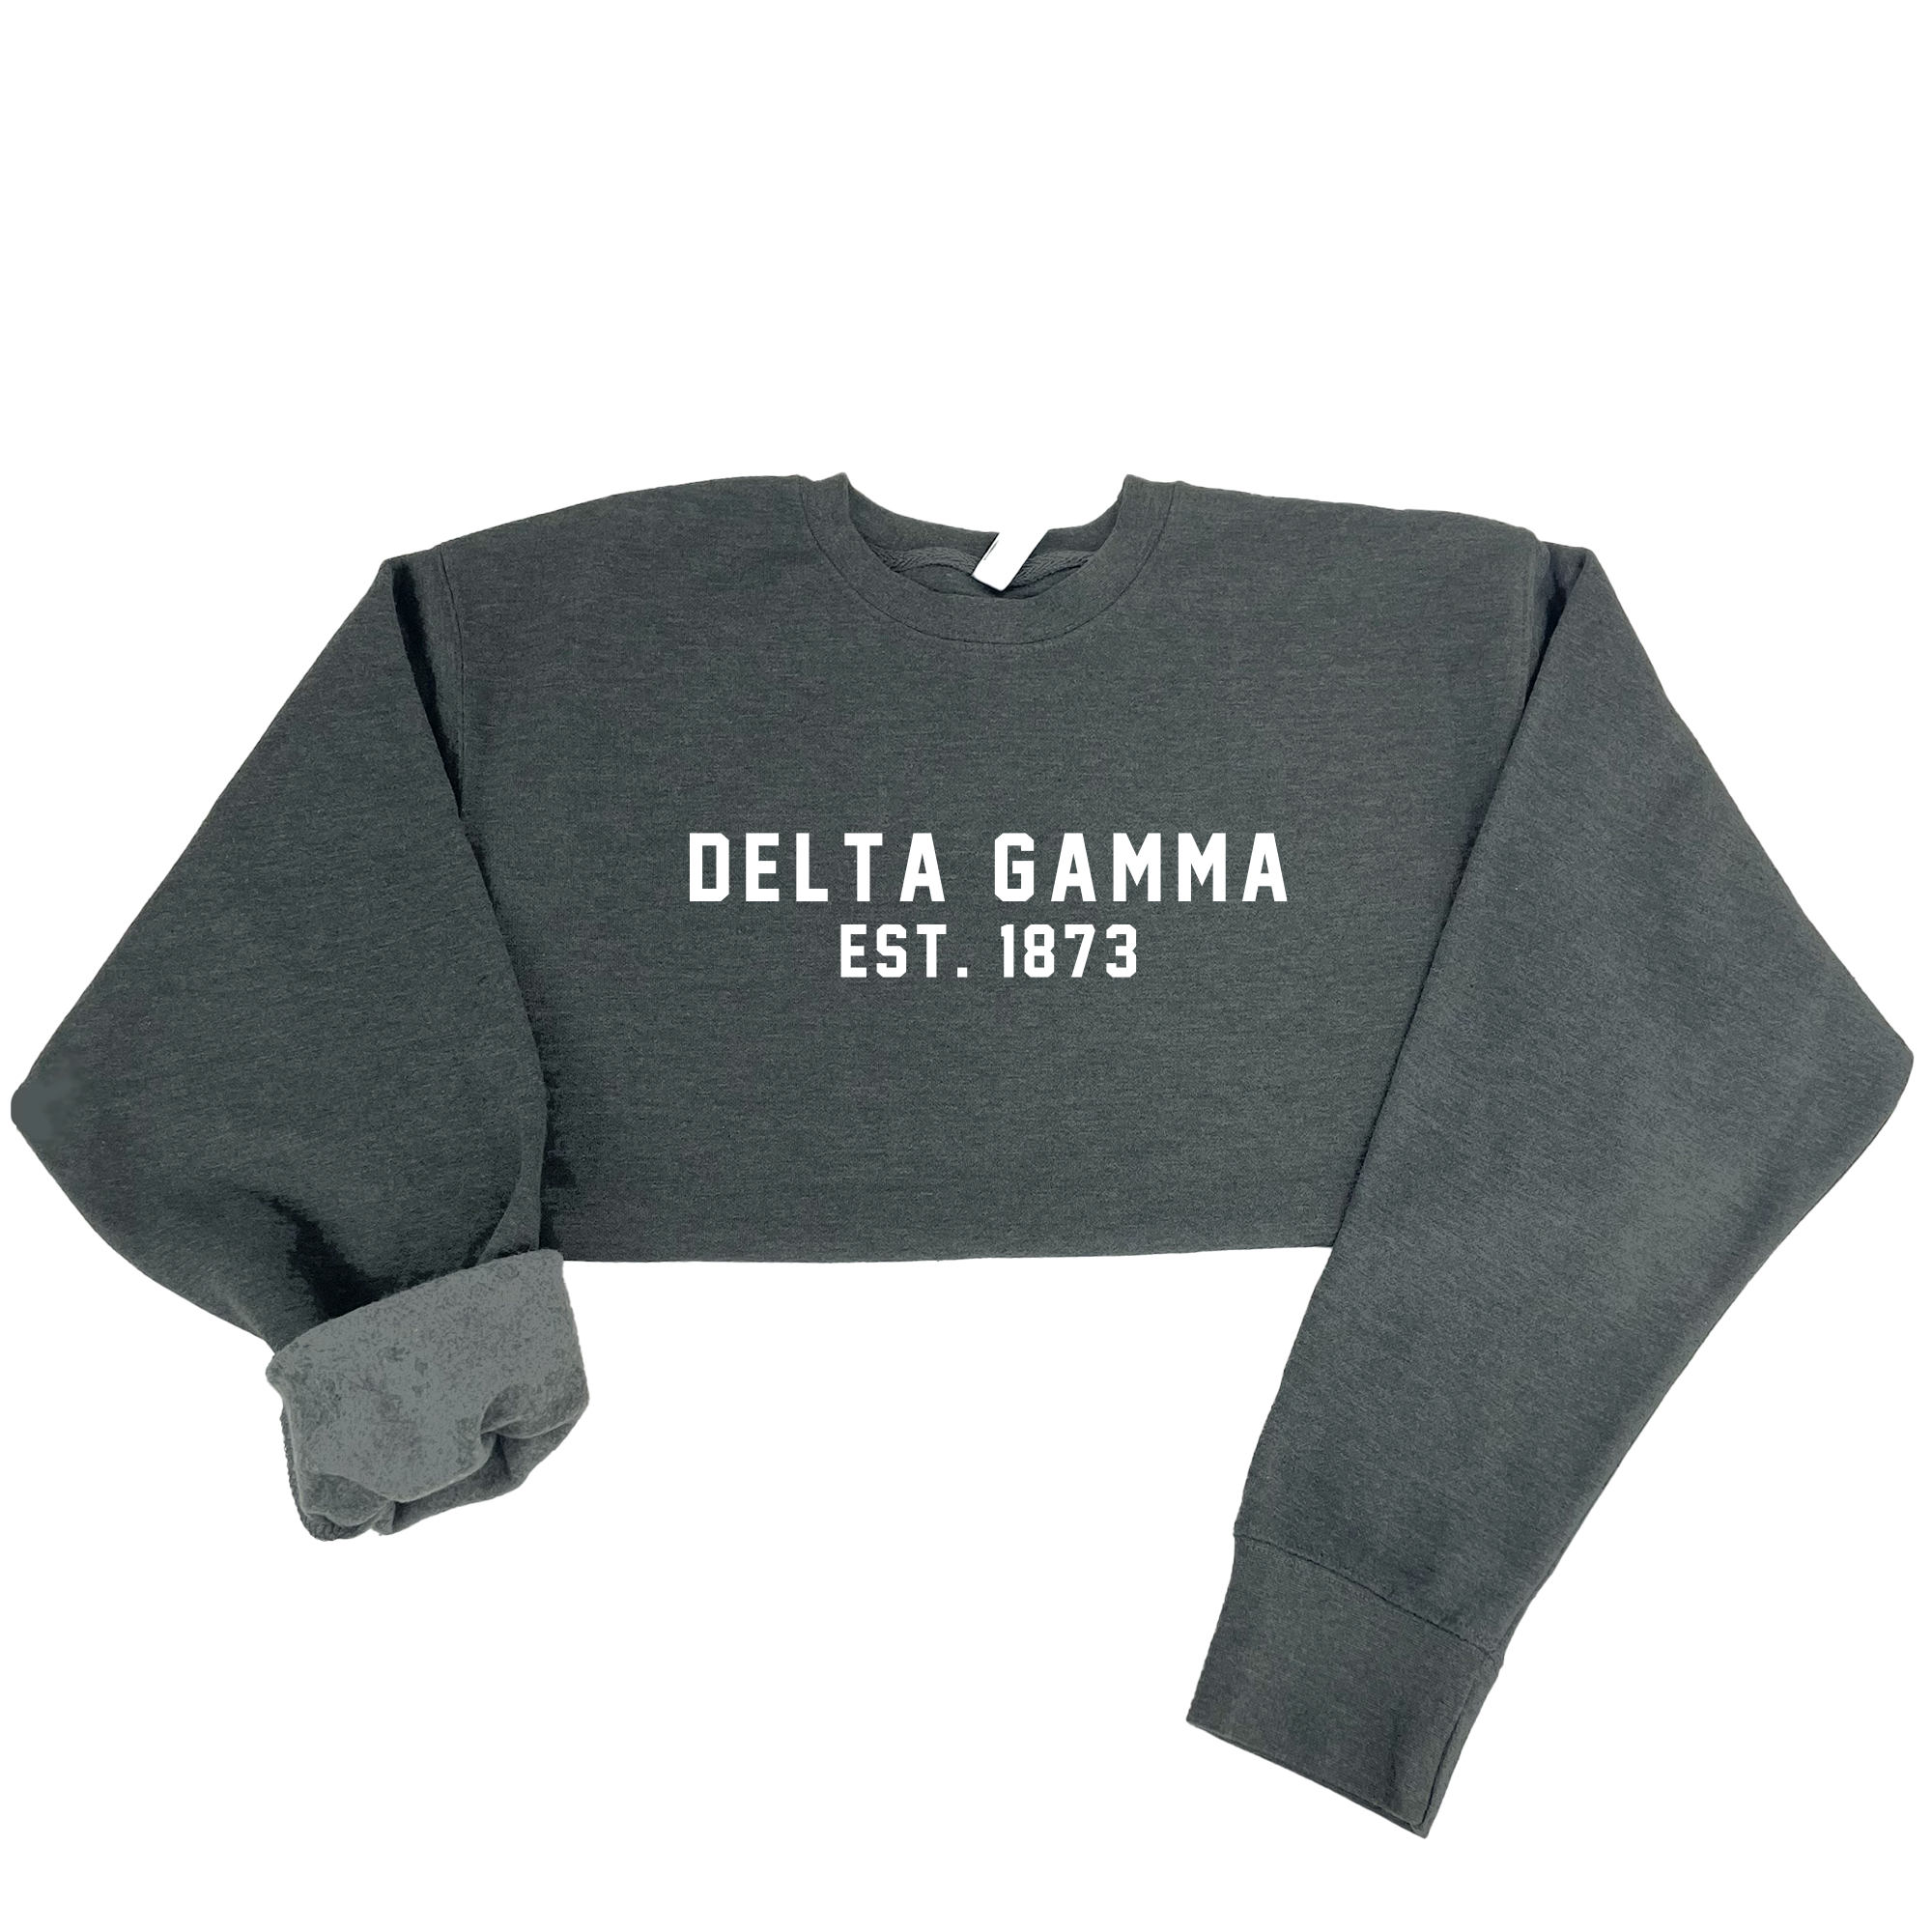 Delta Gamma Est. 1873 Sweatshirt